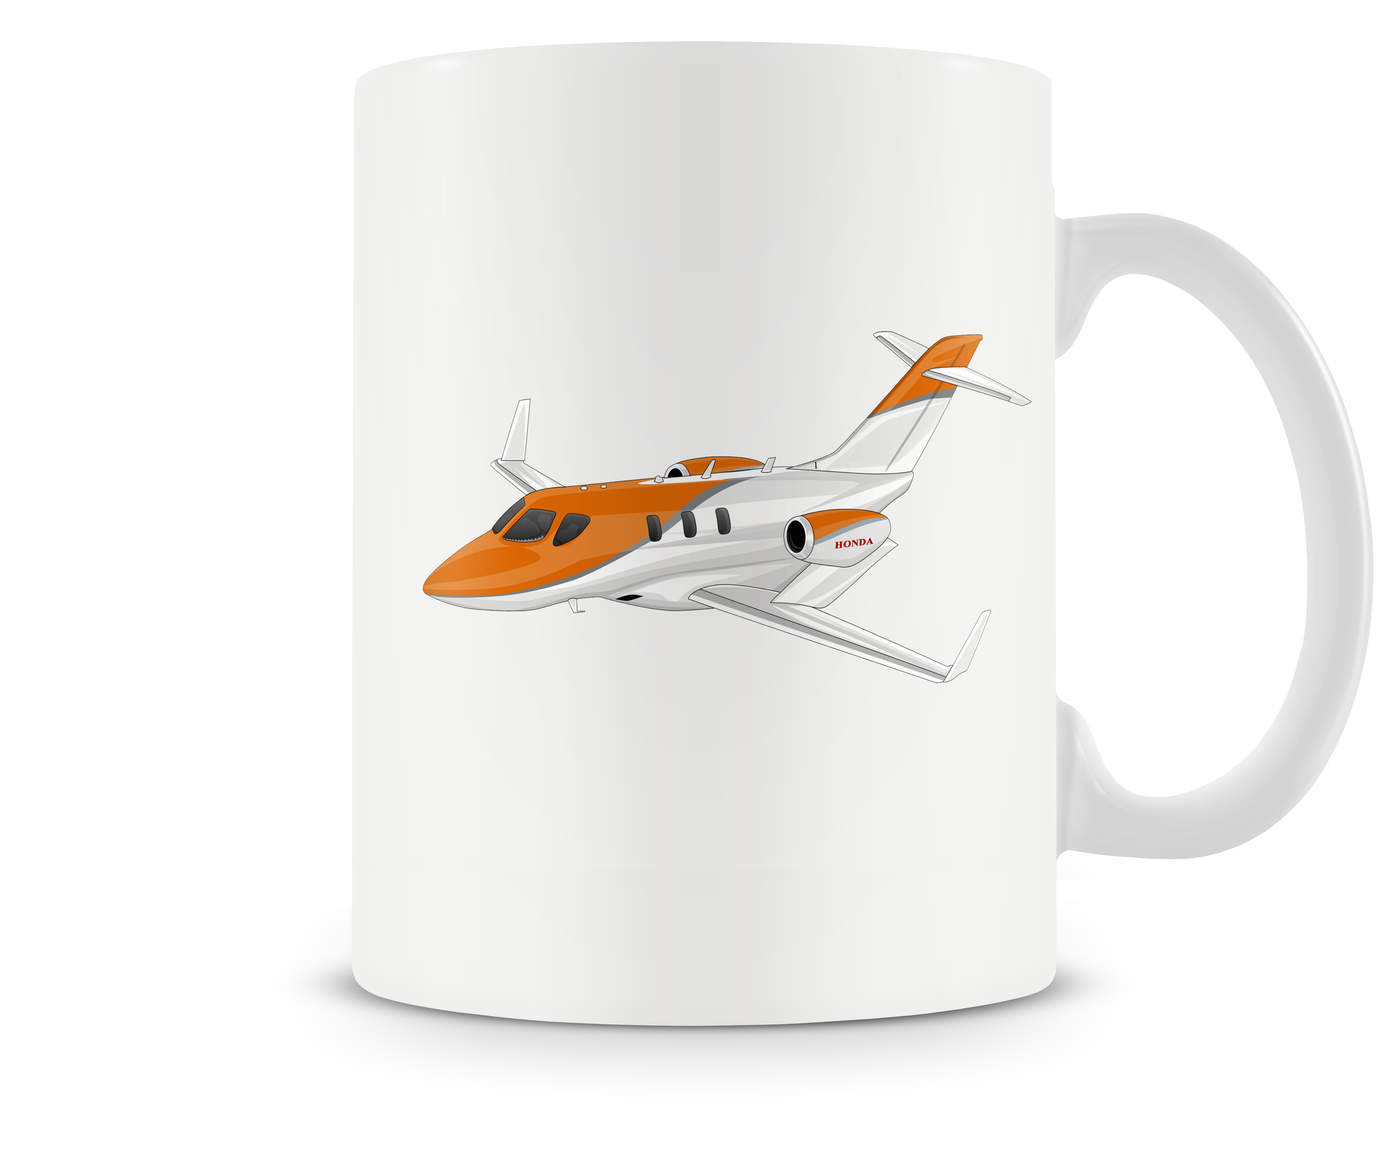 HondaJet Elite S Mug - Aircraft Mugs